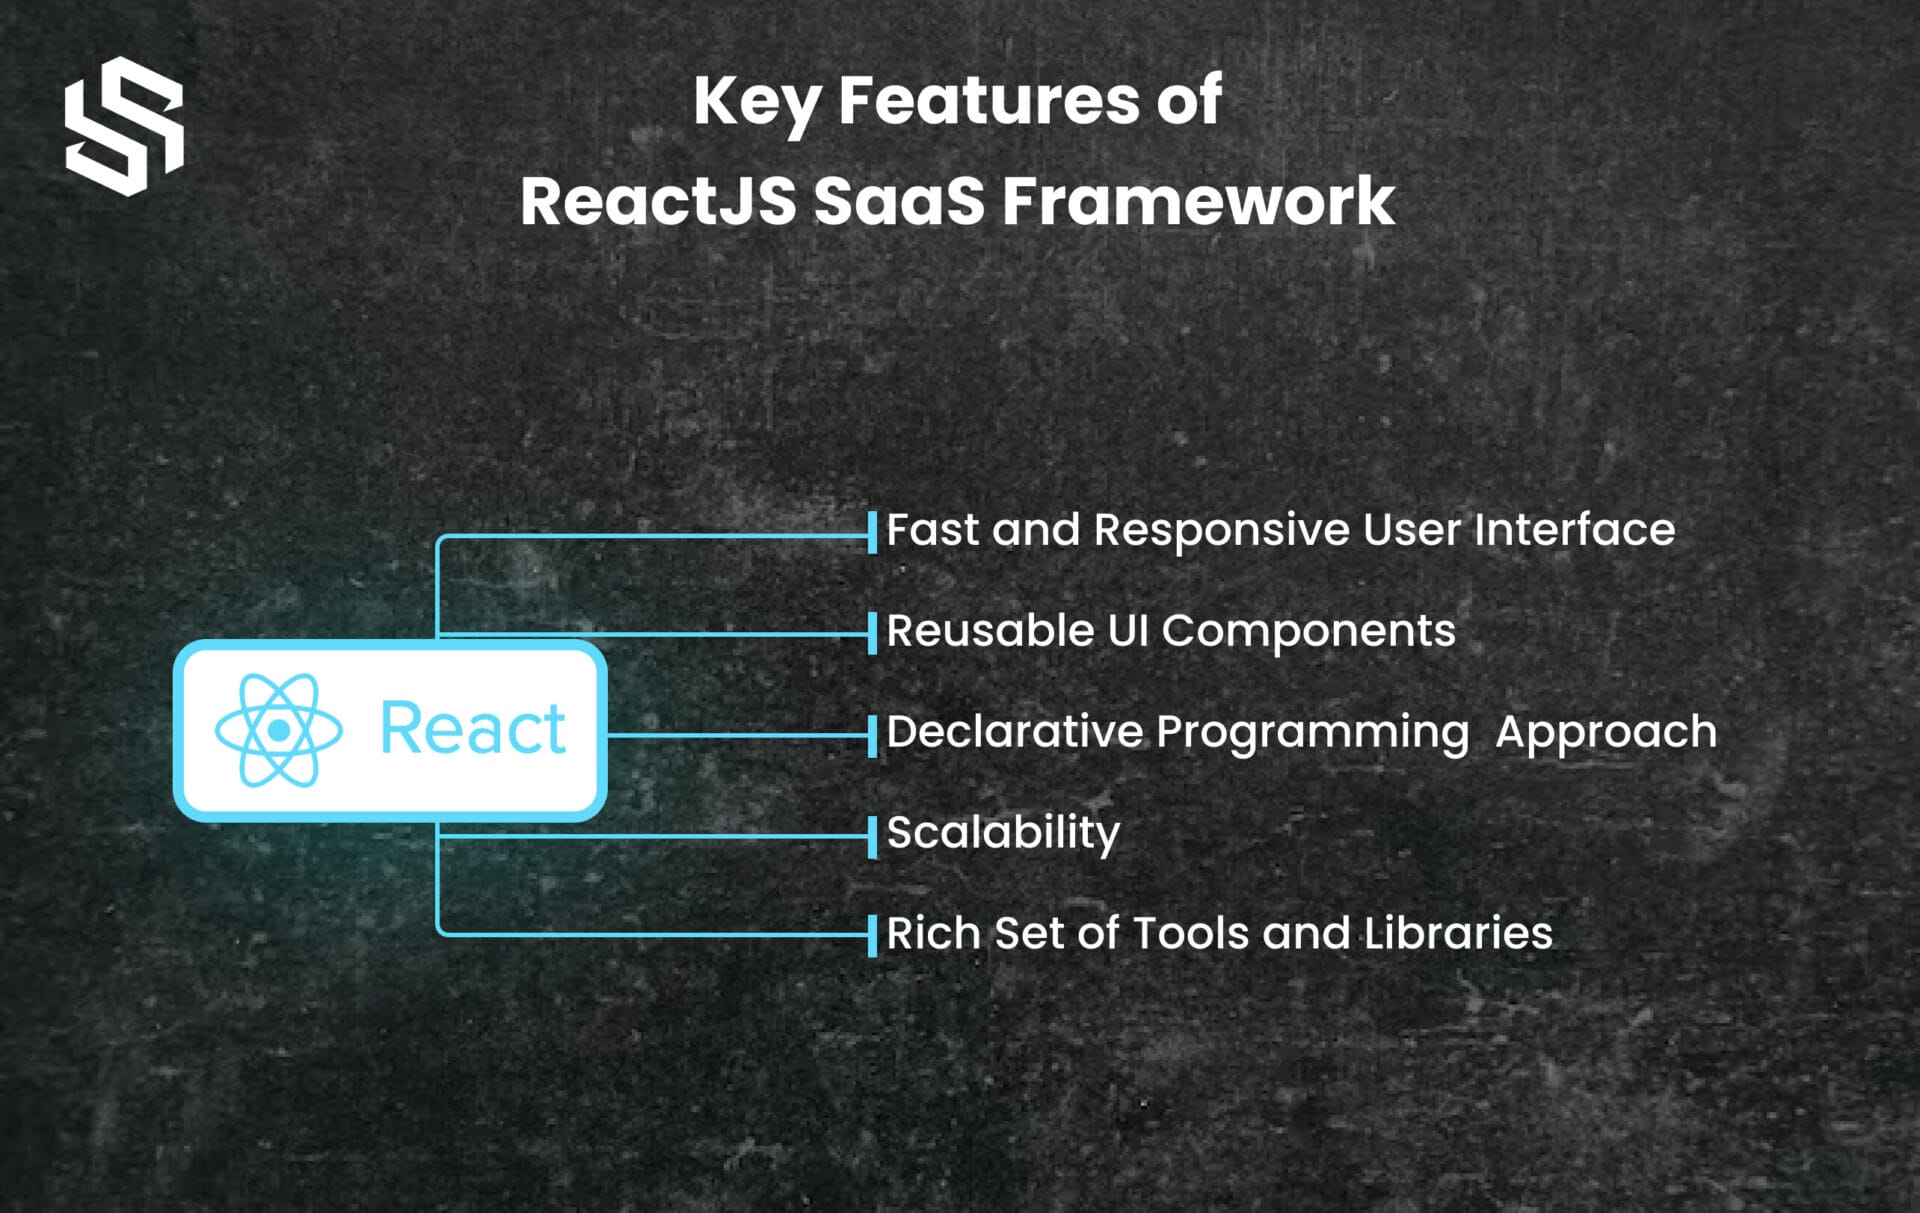 Key Features of ReactJS Framework